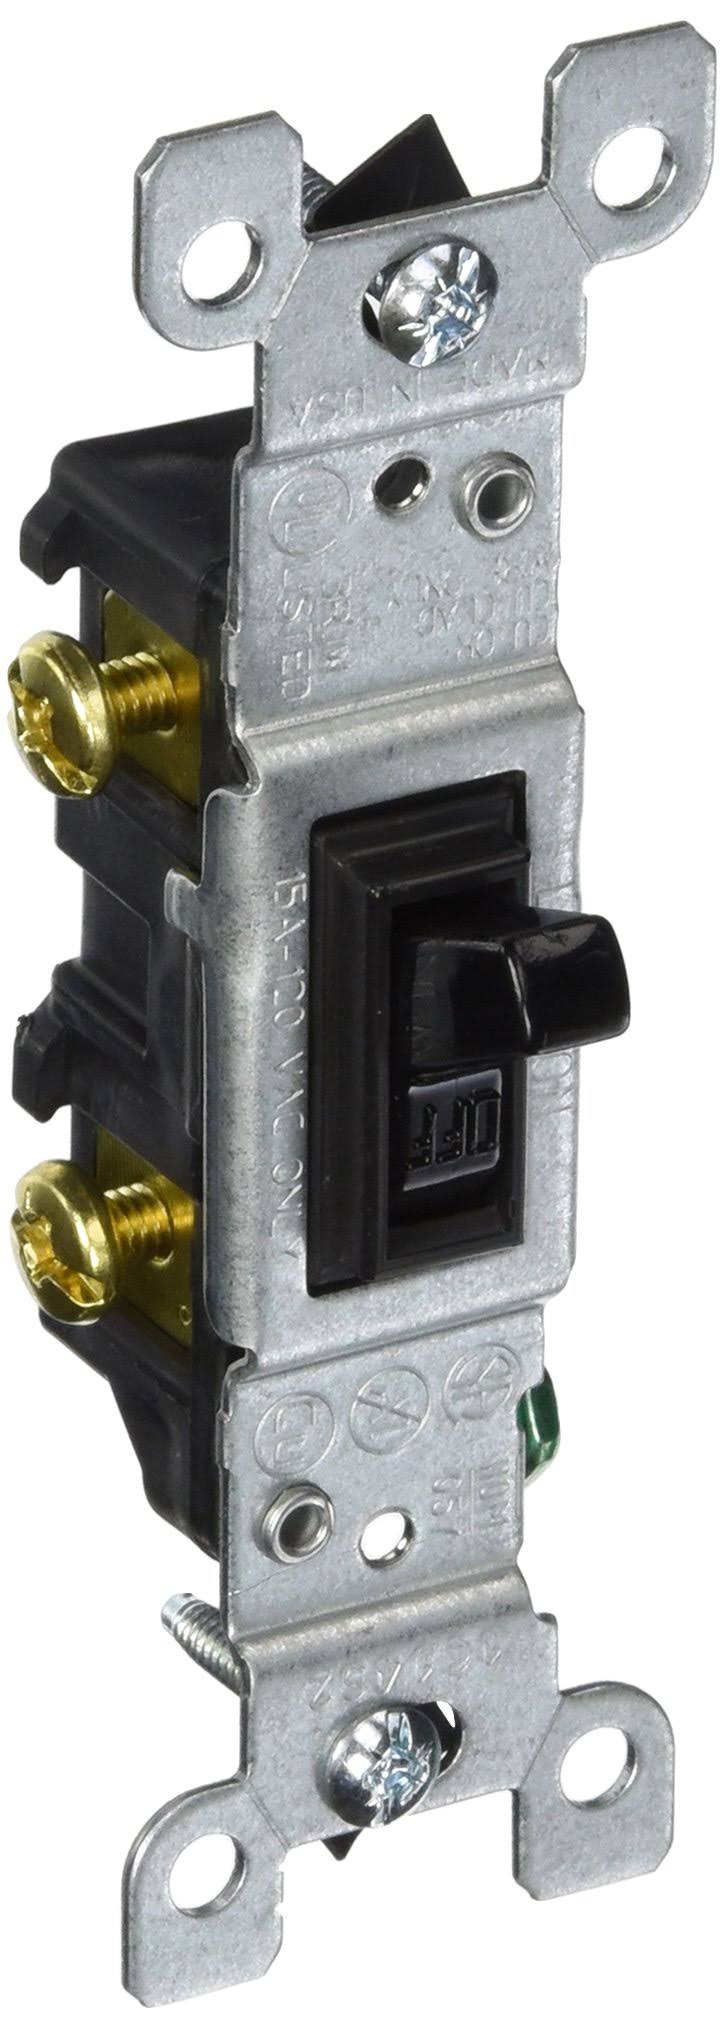 Leviton Single Pole Residential Grade Toggle Switch - Black, 15 Amp, 120V